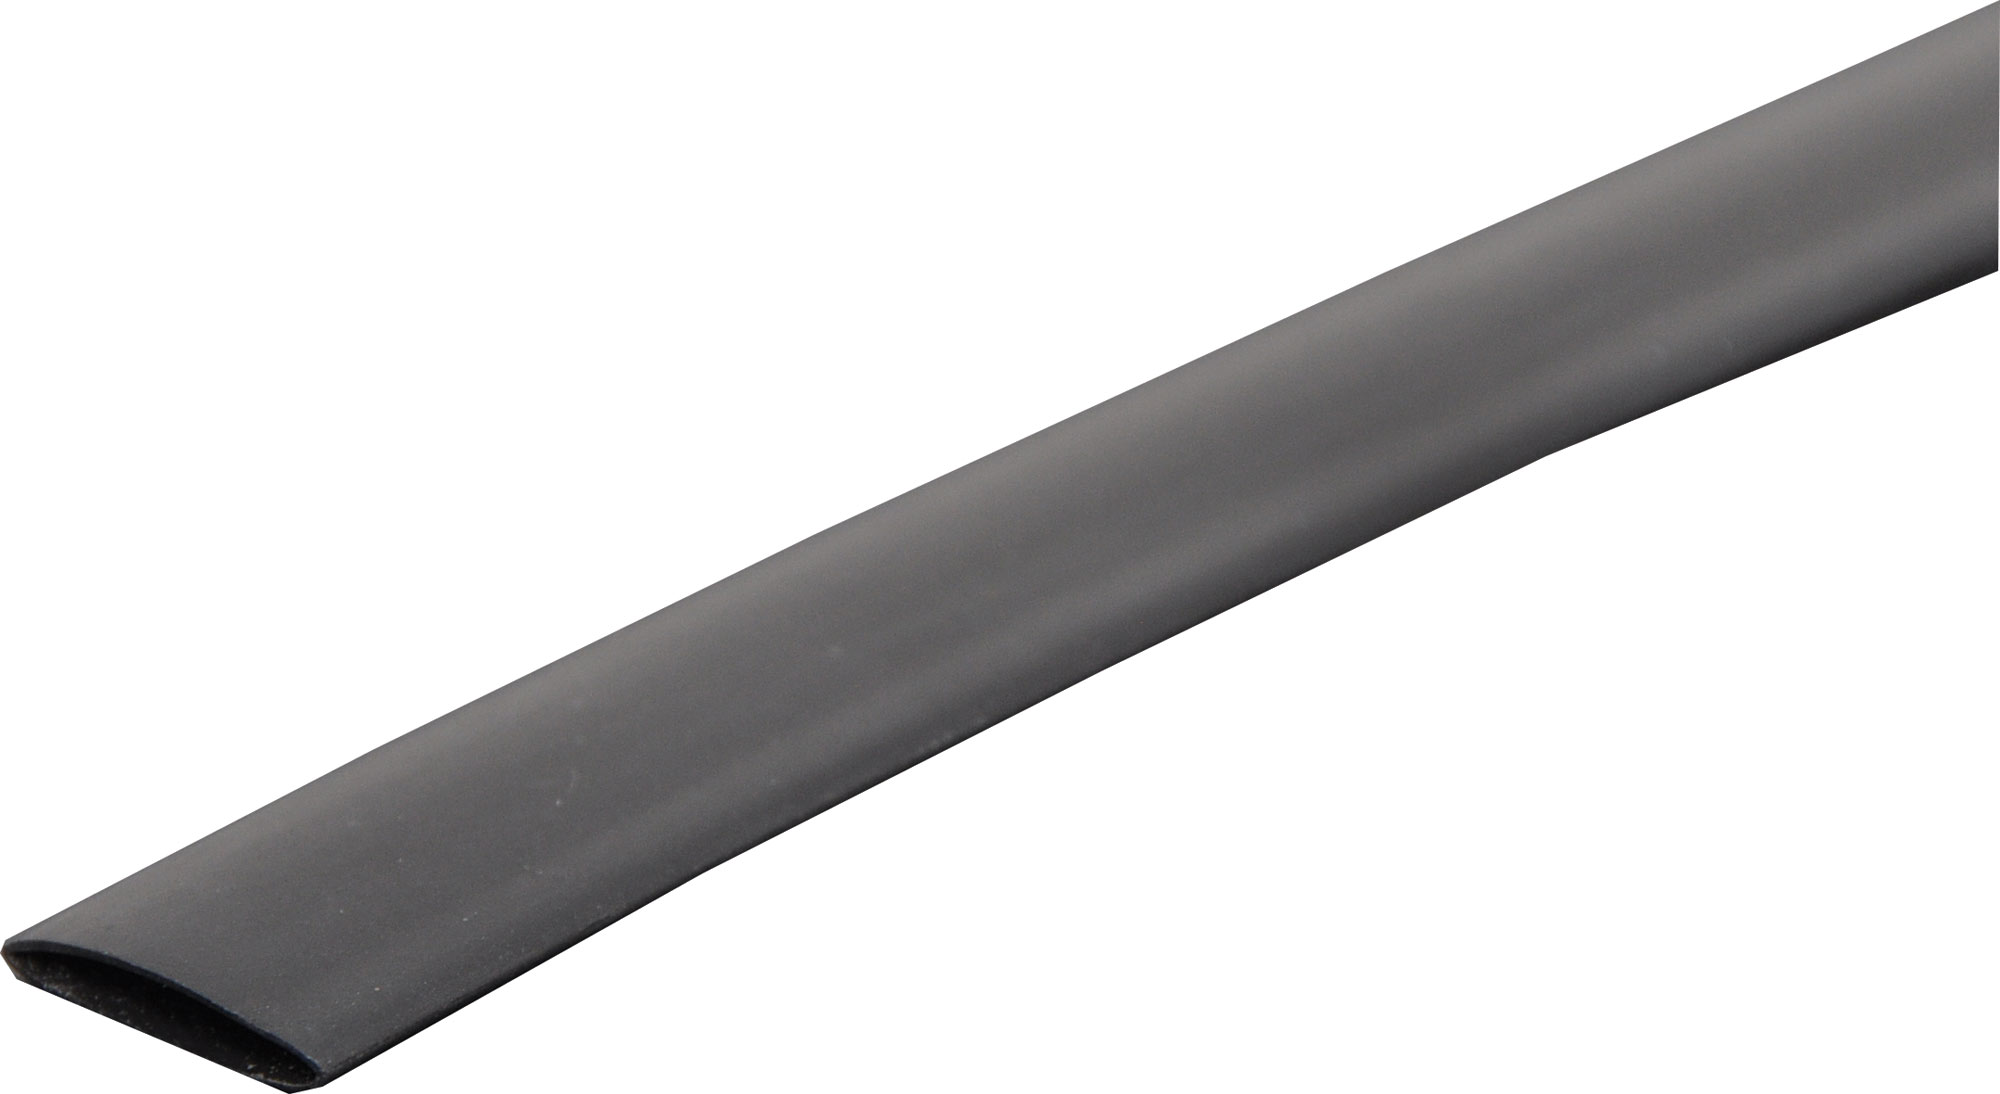 Black 10mm Heat Shrink Tubing 1.0m Length | eBay